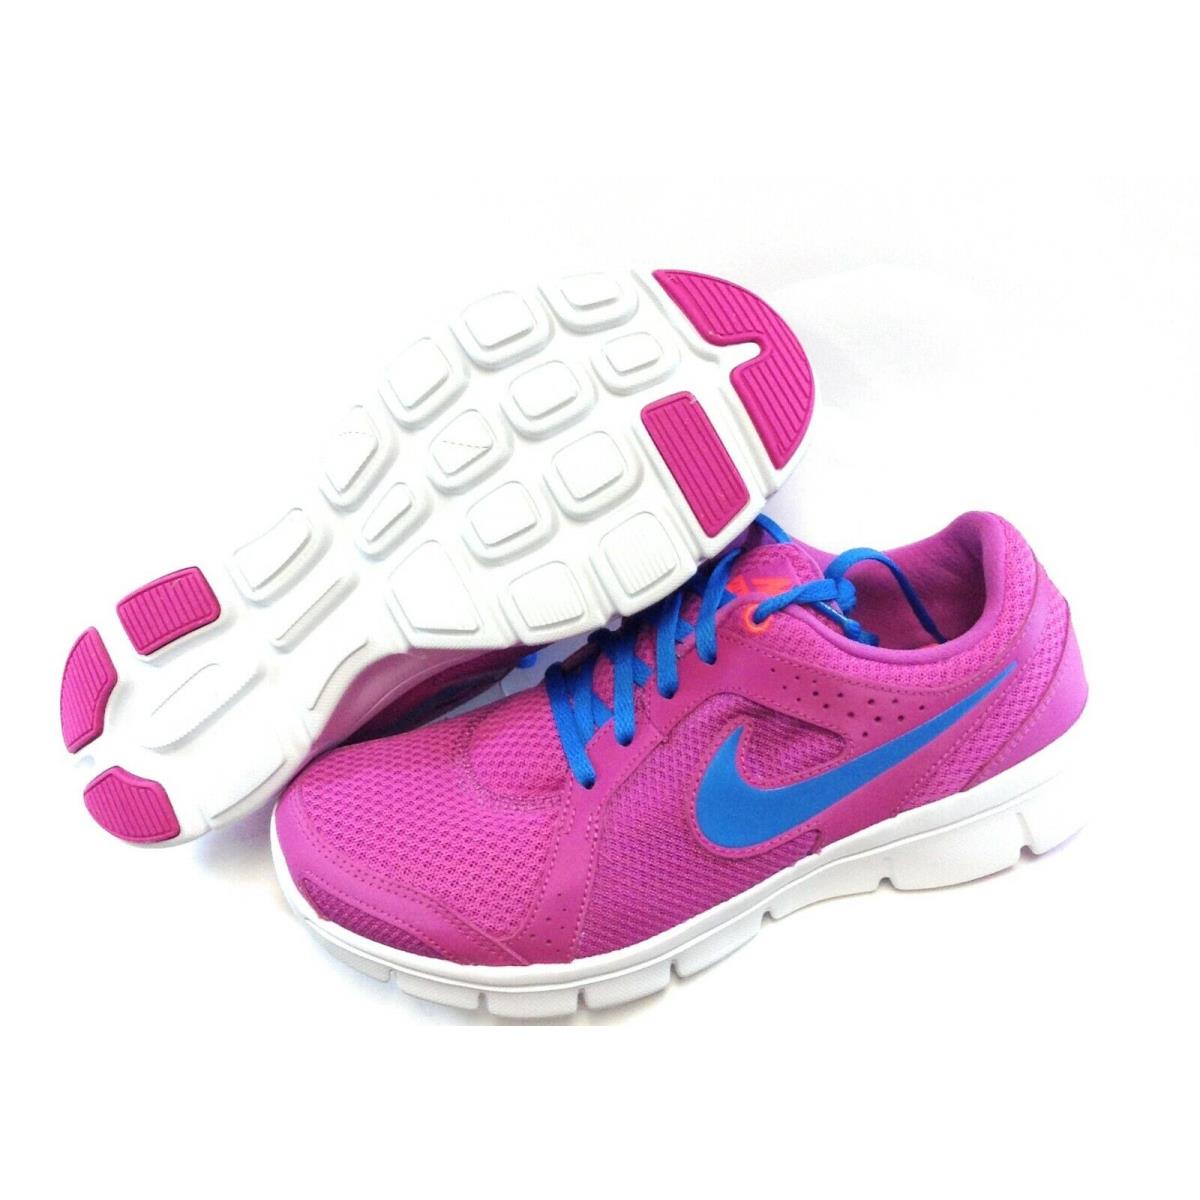 Womens Nike Flex Experience RN 2 599548 601 Fuchsia Blue 2013 DS Sneakers Shoes - Fuchsia